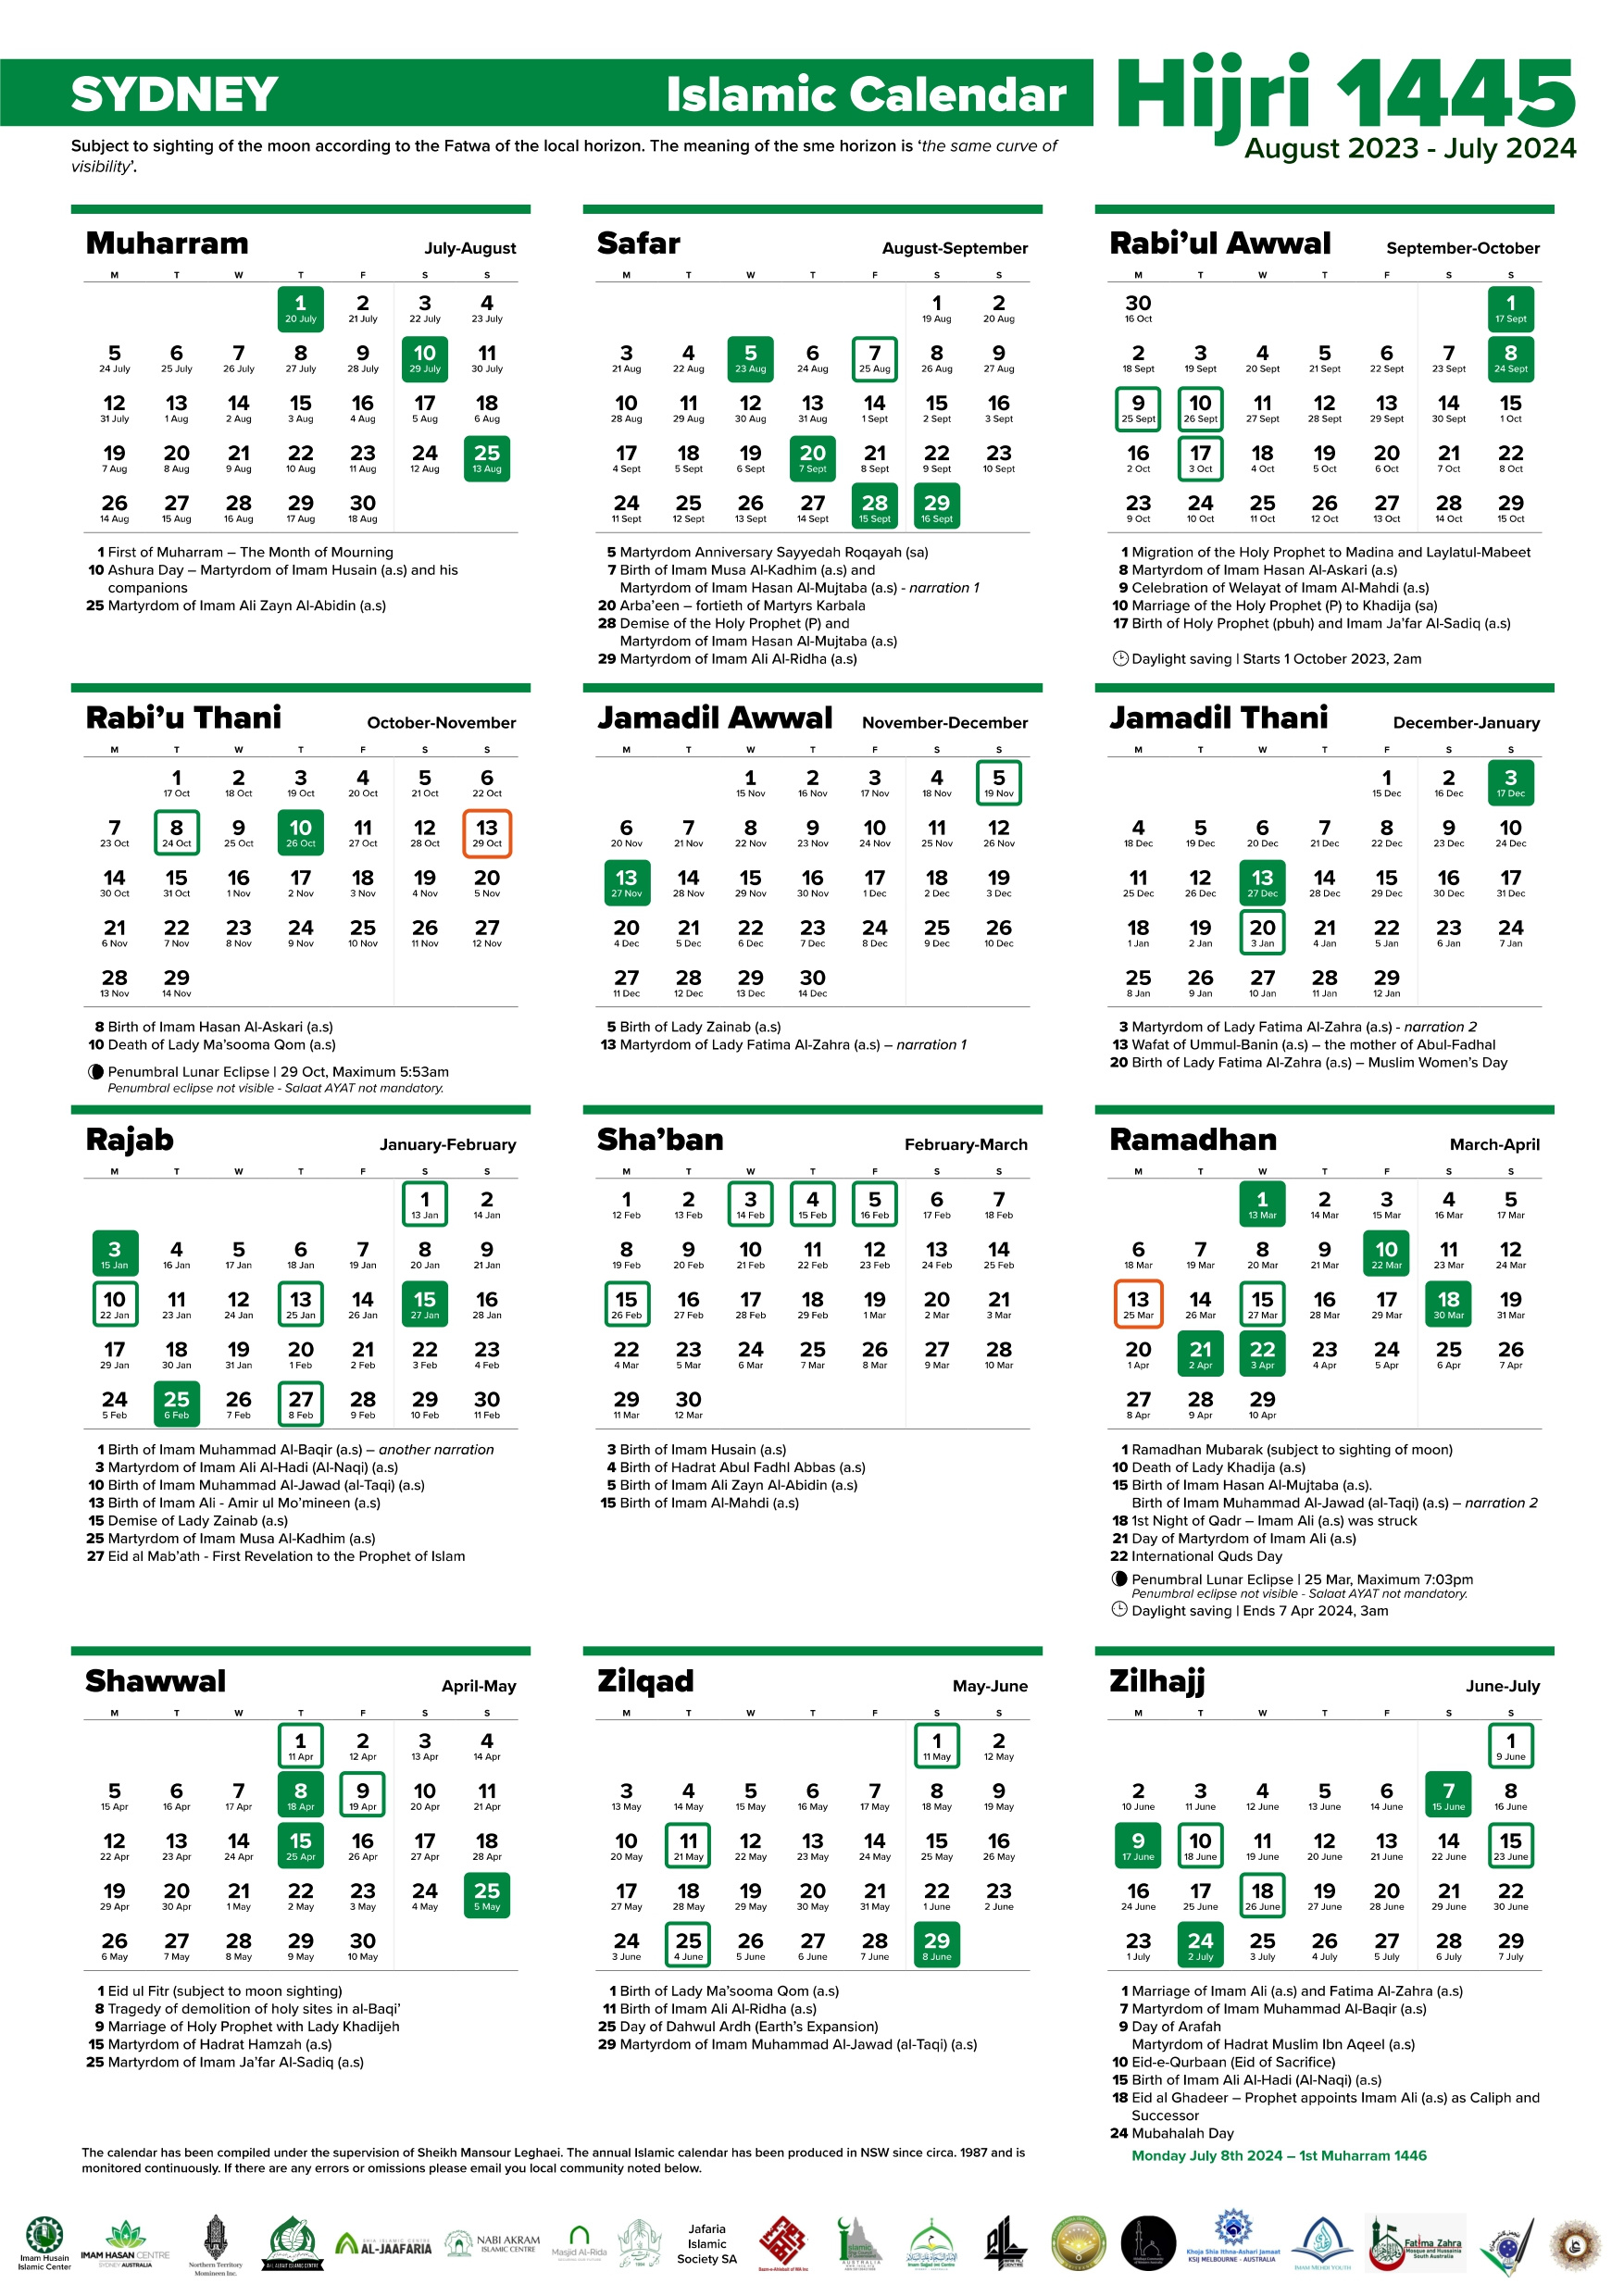 Annual Islamic Calendar 1445 Ah / 2023-2024 Ad – Imam Husain within 18 July 2024 In Islamic Calendar